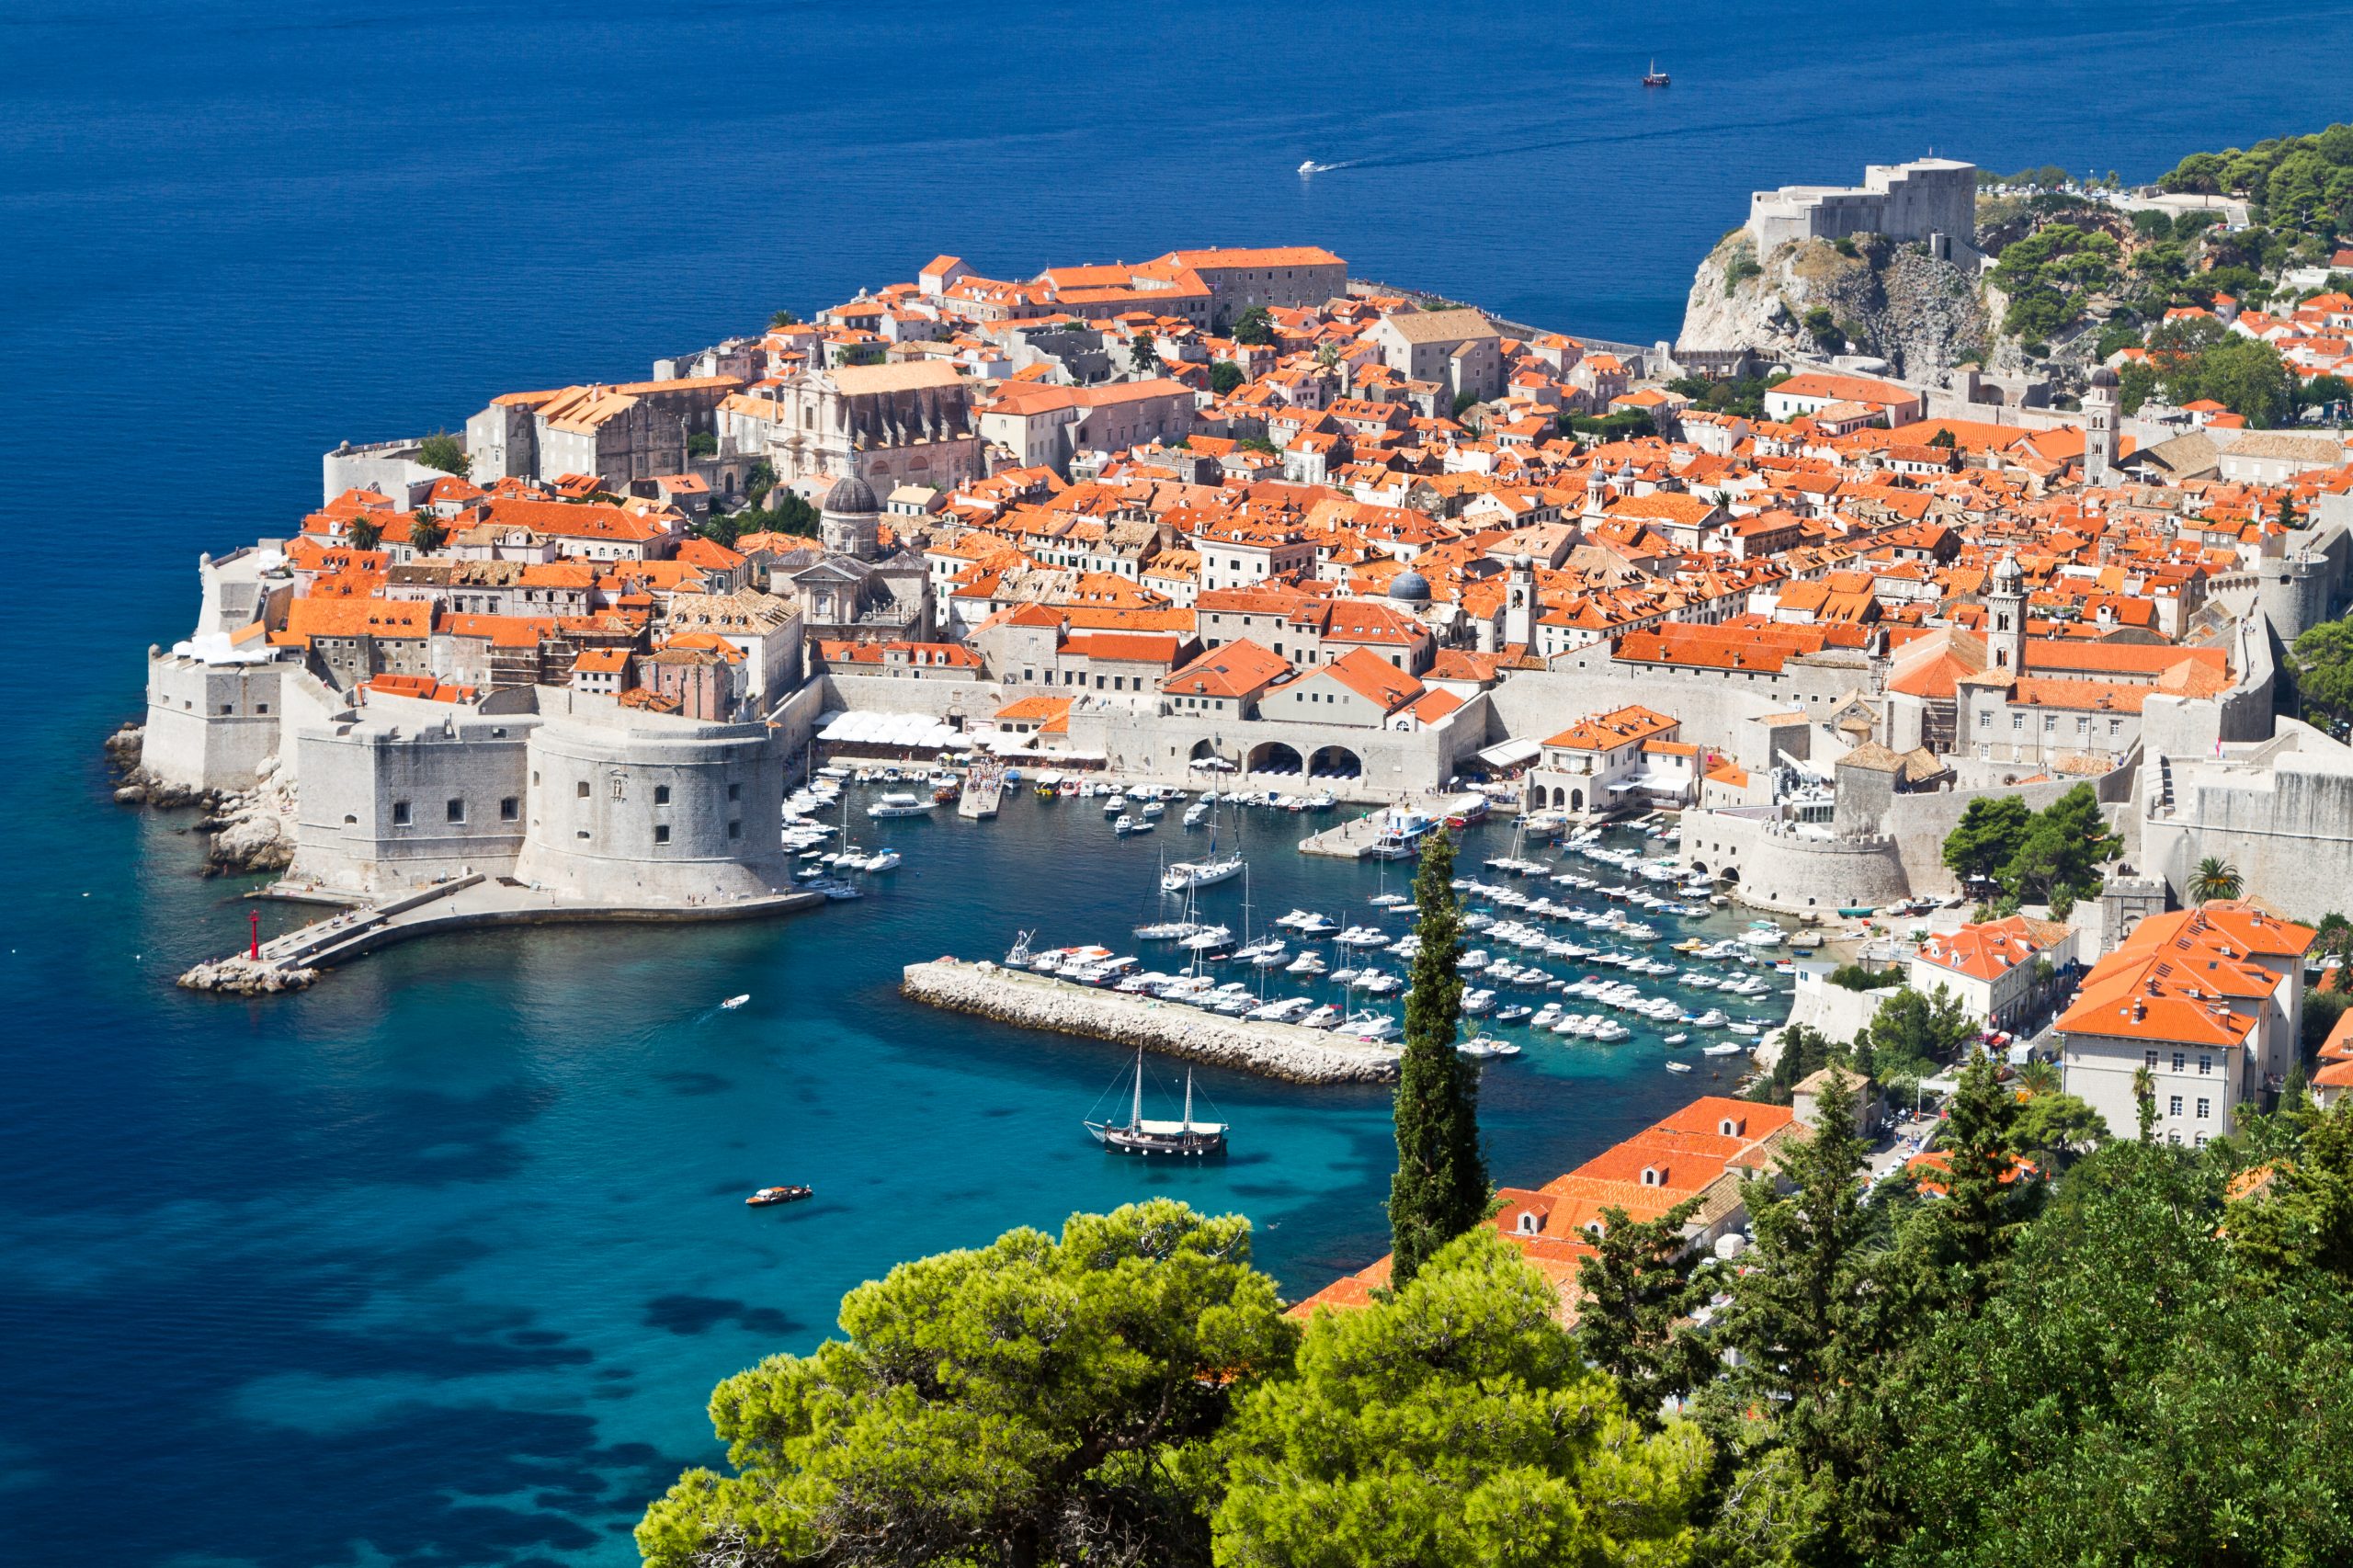 DUBROVNIK CRUCEROS CROACIA CRUCEROS DUBROVNIK CRUCEROS EXPLORACION CROACIA CRUCEROS ADRIATICO #Dubrovnik #Croacia #Cruceros #NationalGeographic